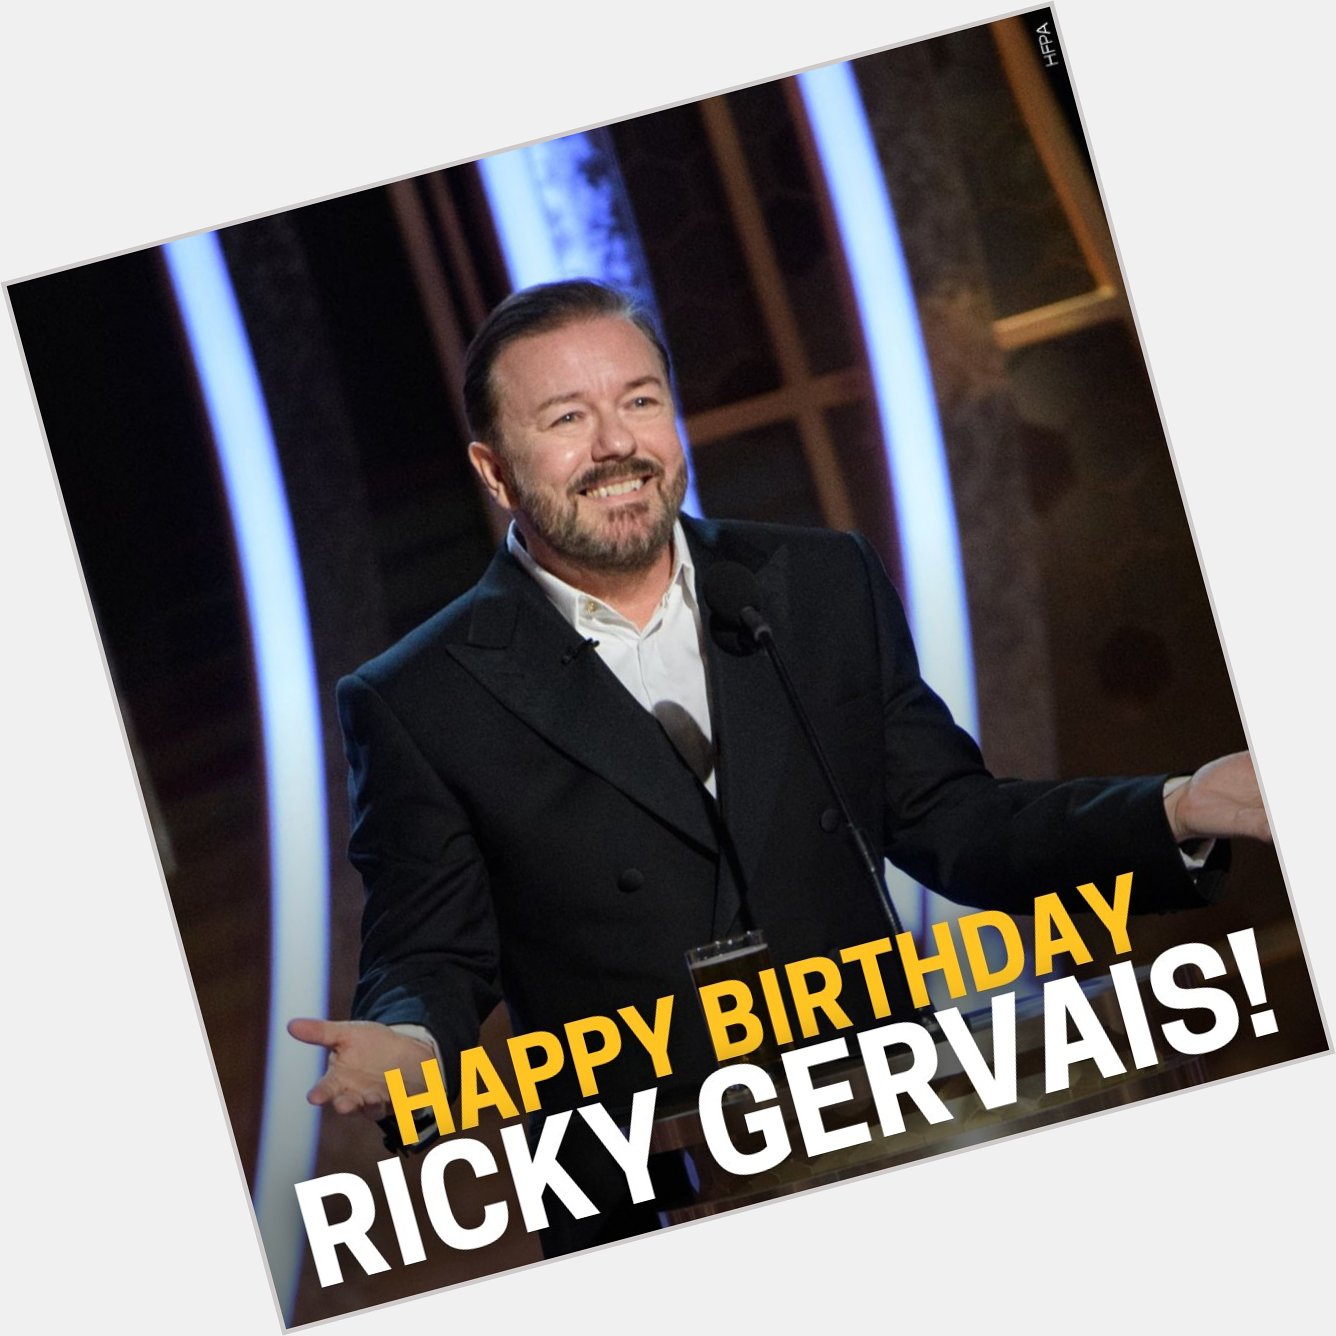 Happy birthday to Ricky Gervais! 